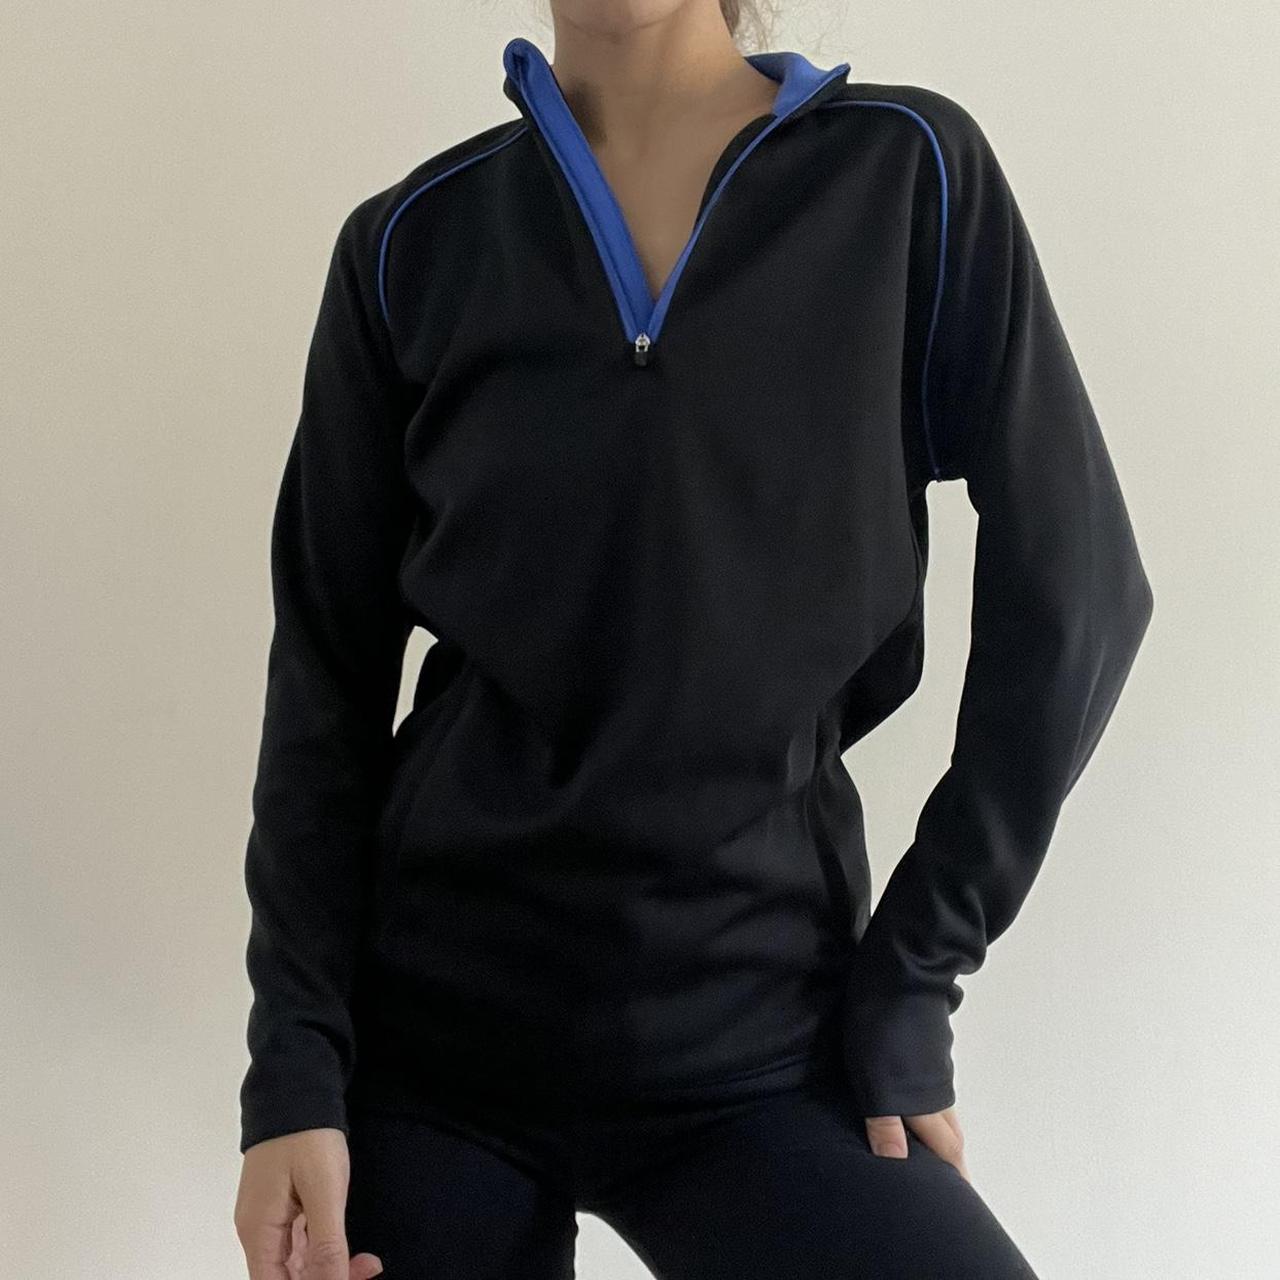 Slazenger Women's Black and Blue Sweatshirt